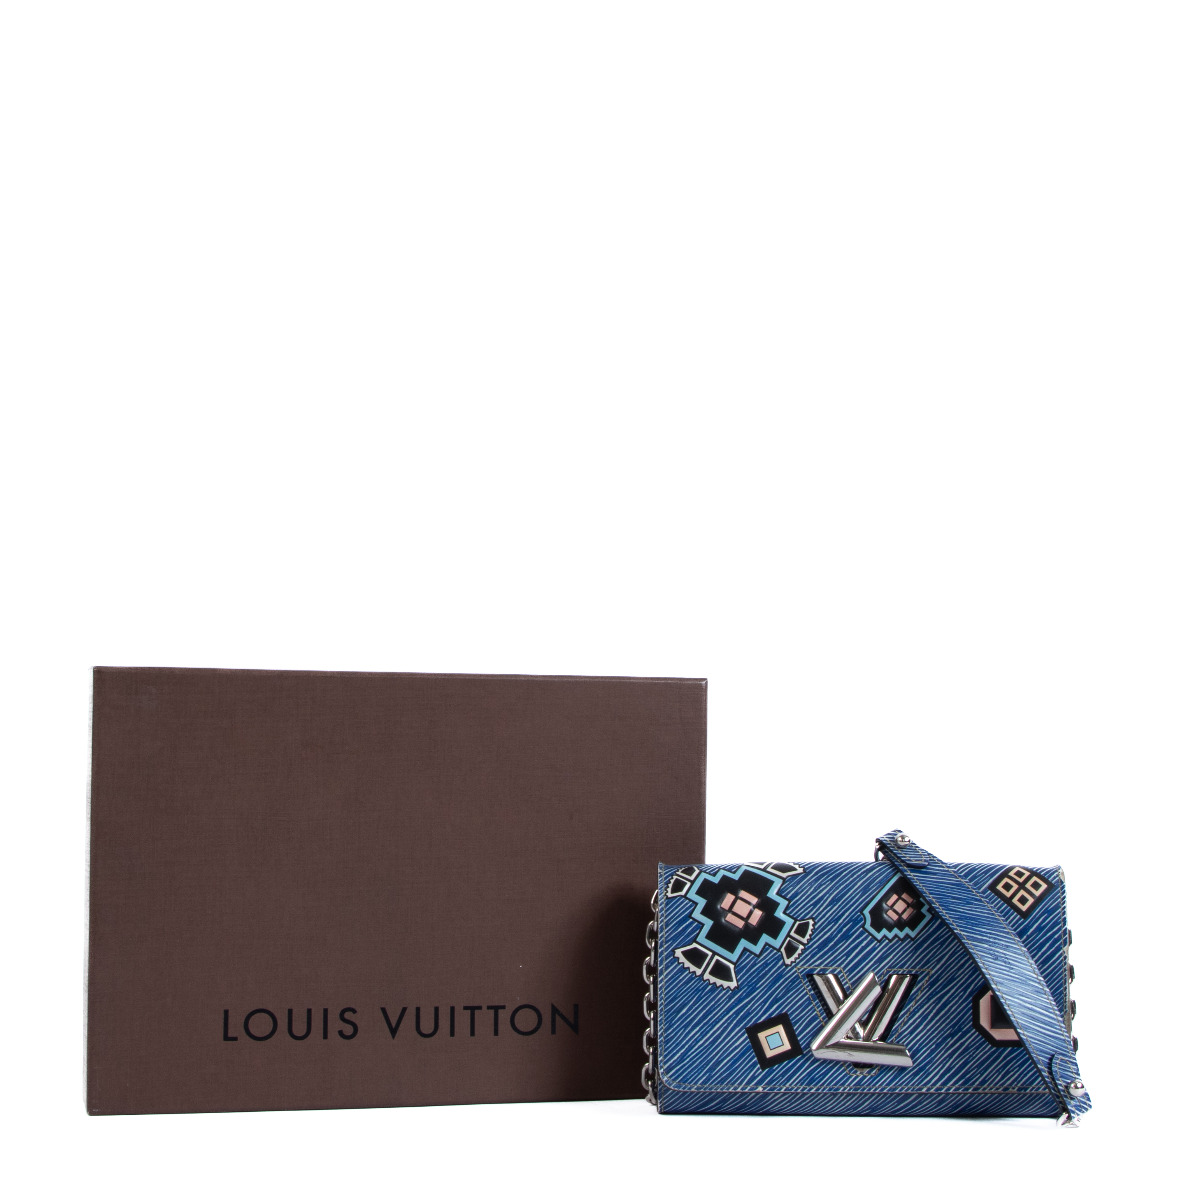 Louis Vuitton Twist Chain Wallet Azteque Epi Limited, 40% OFF